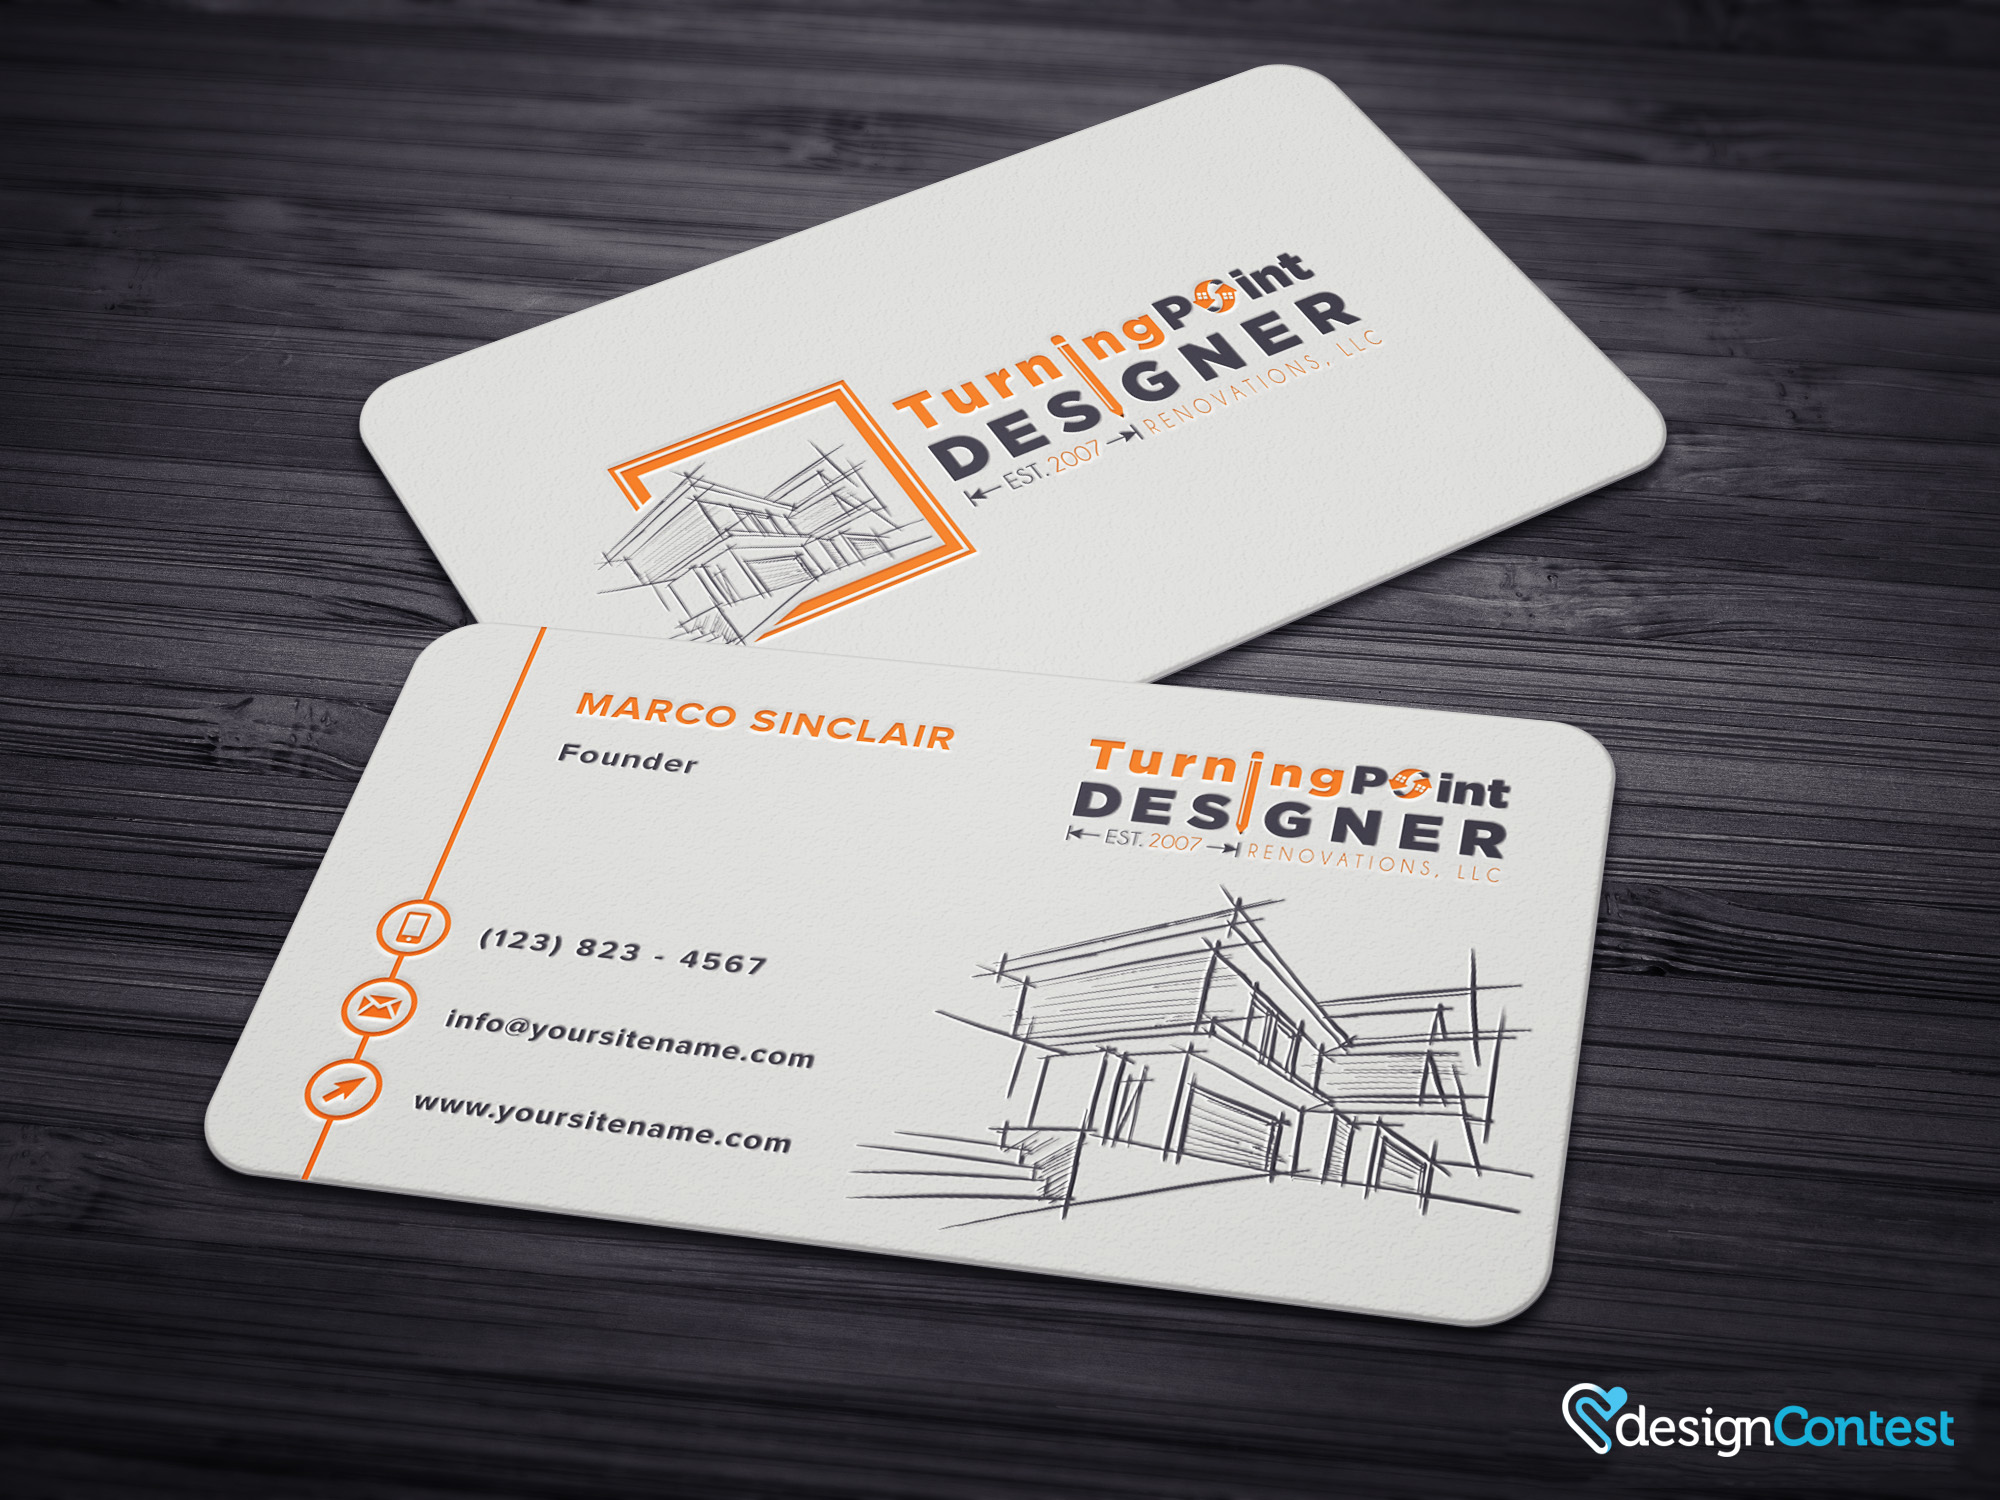 Business card design with DesignContest22 copy